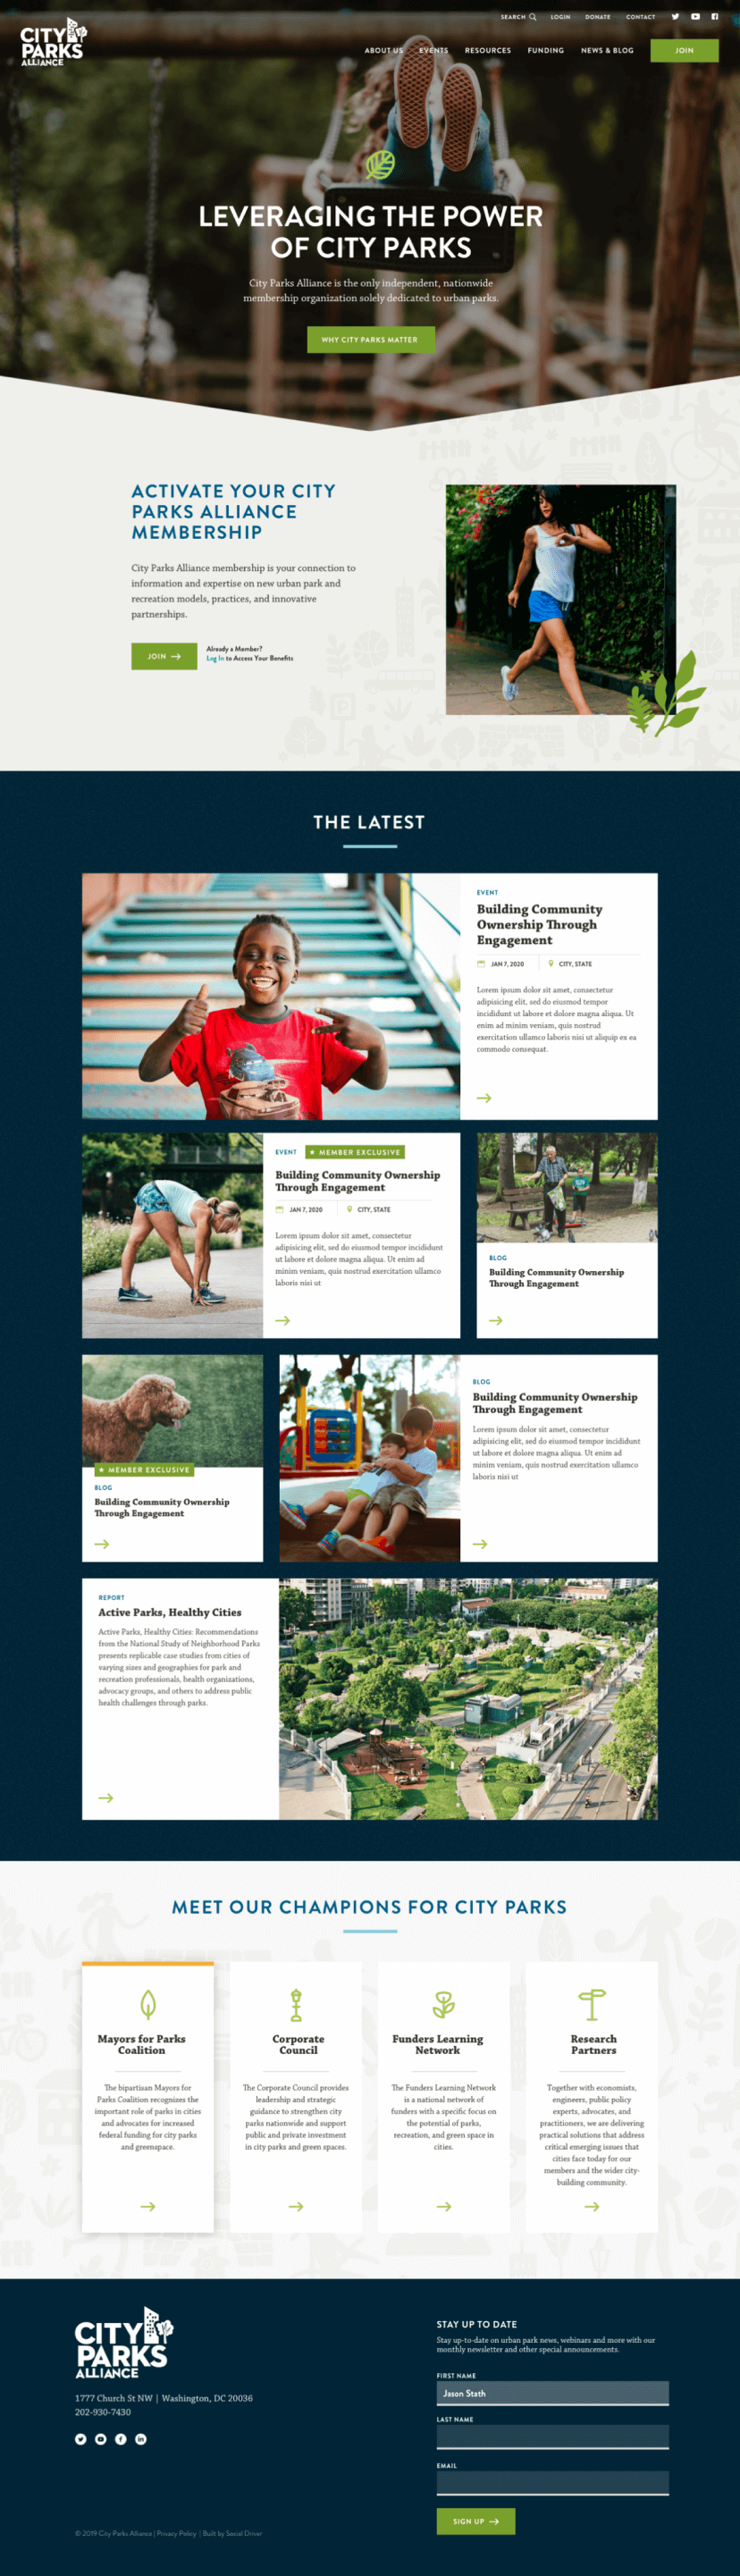 City Parks homepage design